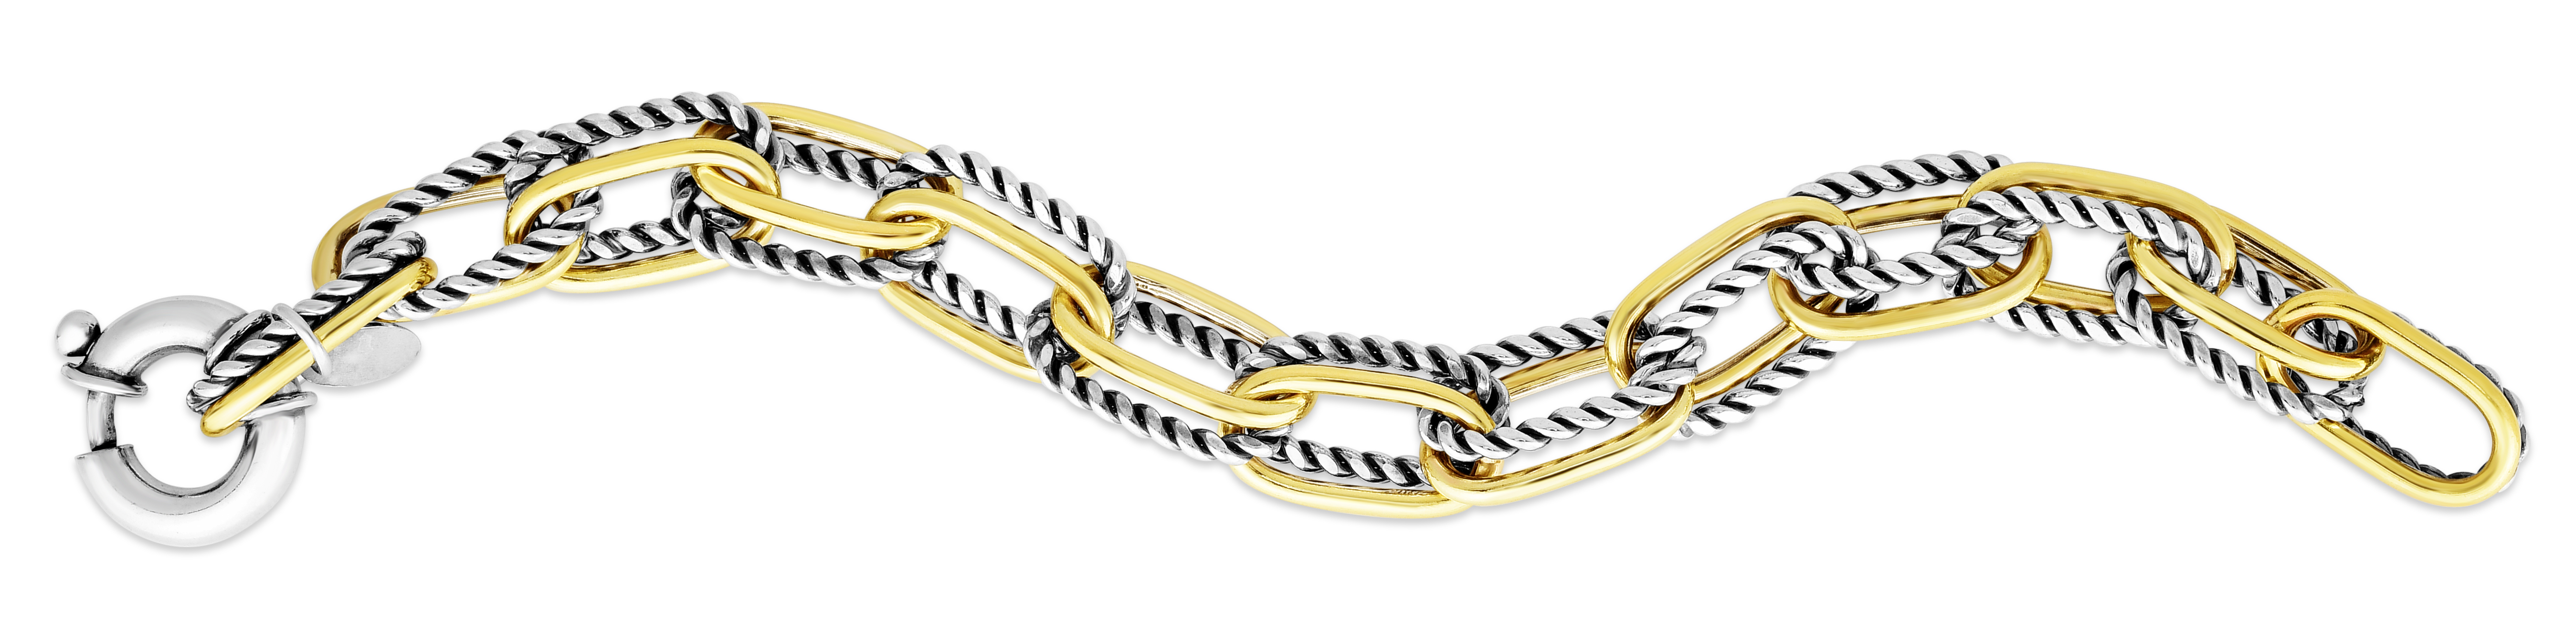 Two-Tone Chain Link Bracelet